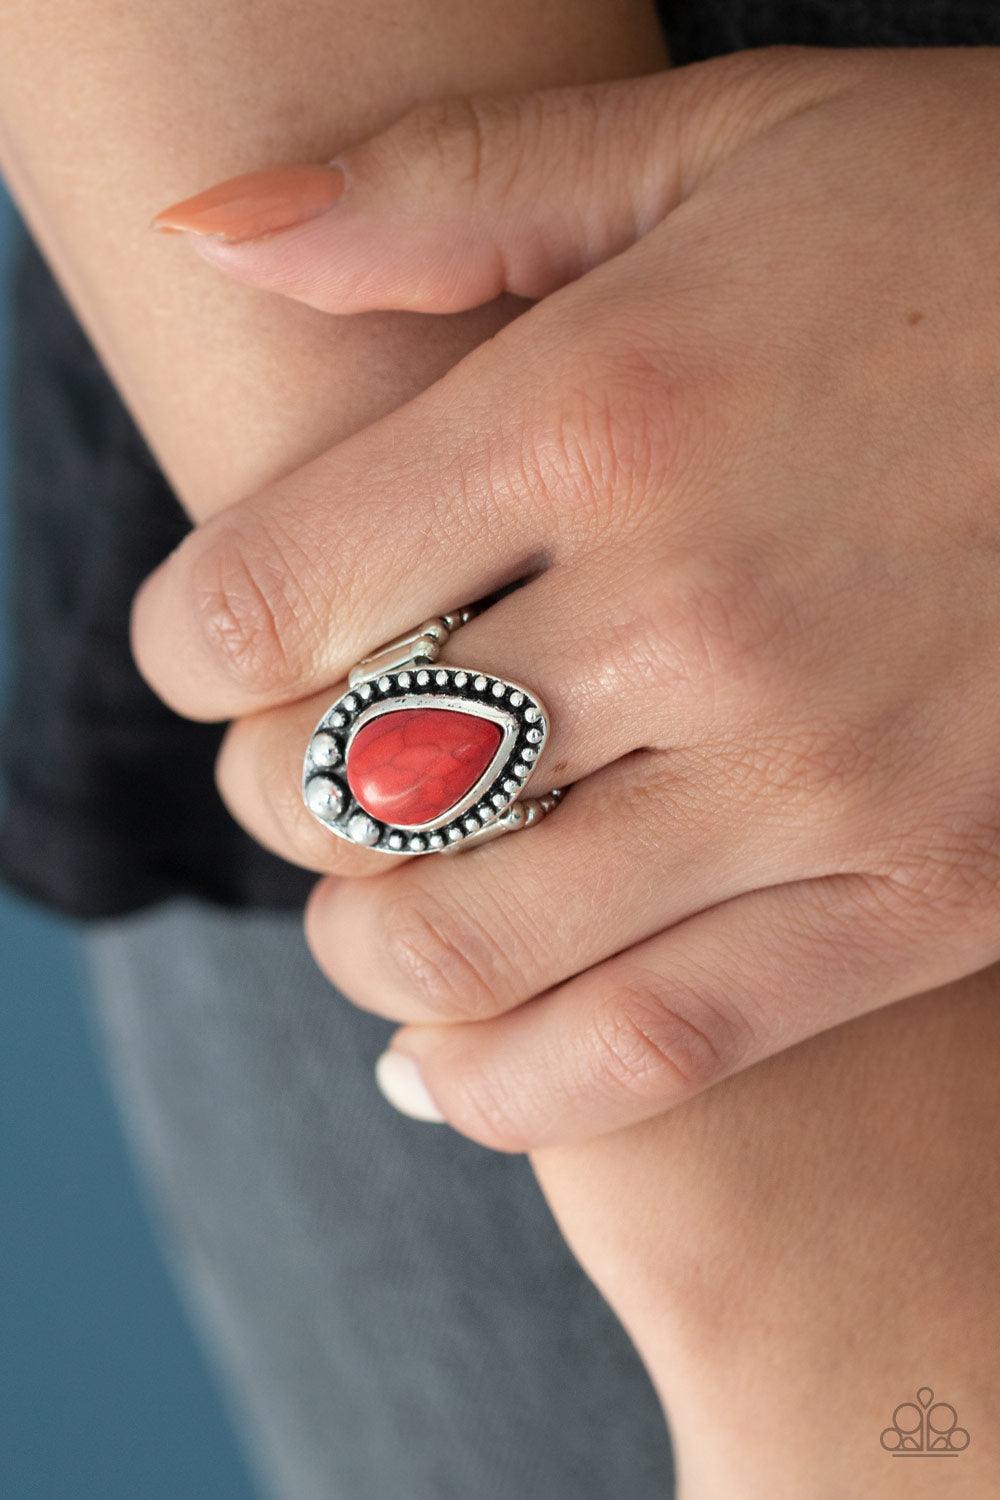 Backroad Bauble Red Ring - Jewelry By Bretta - Jewelry by Bretta